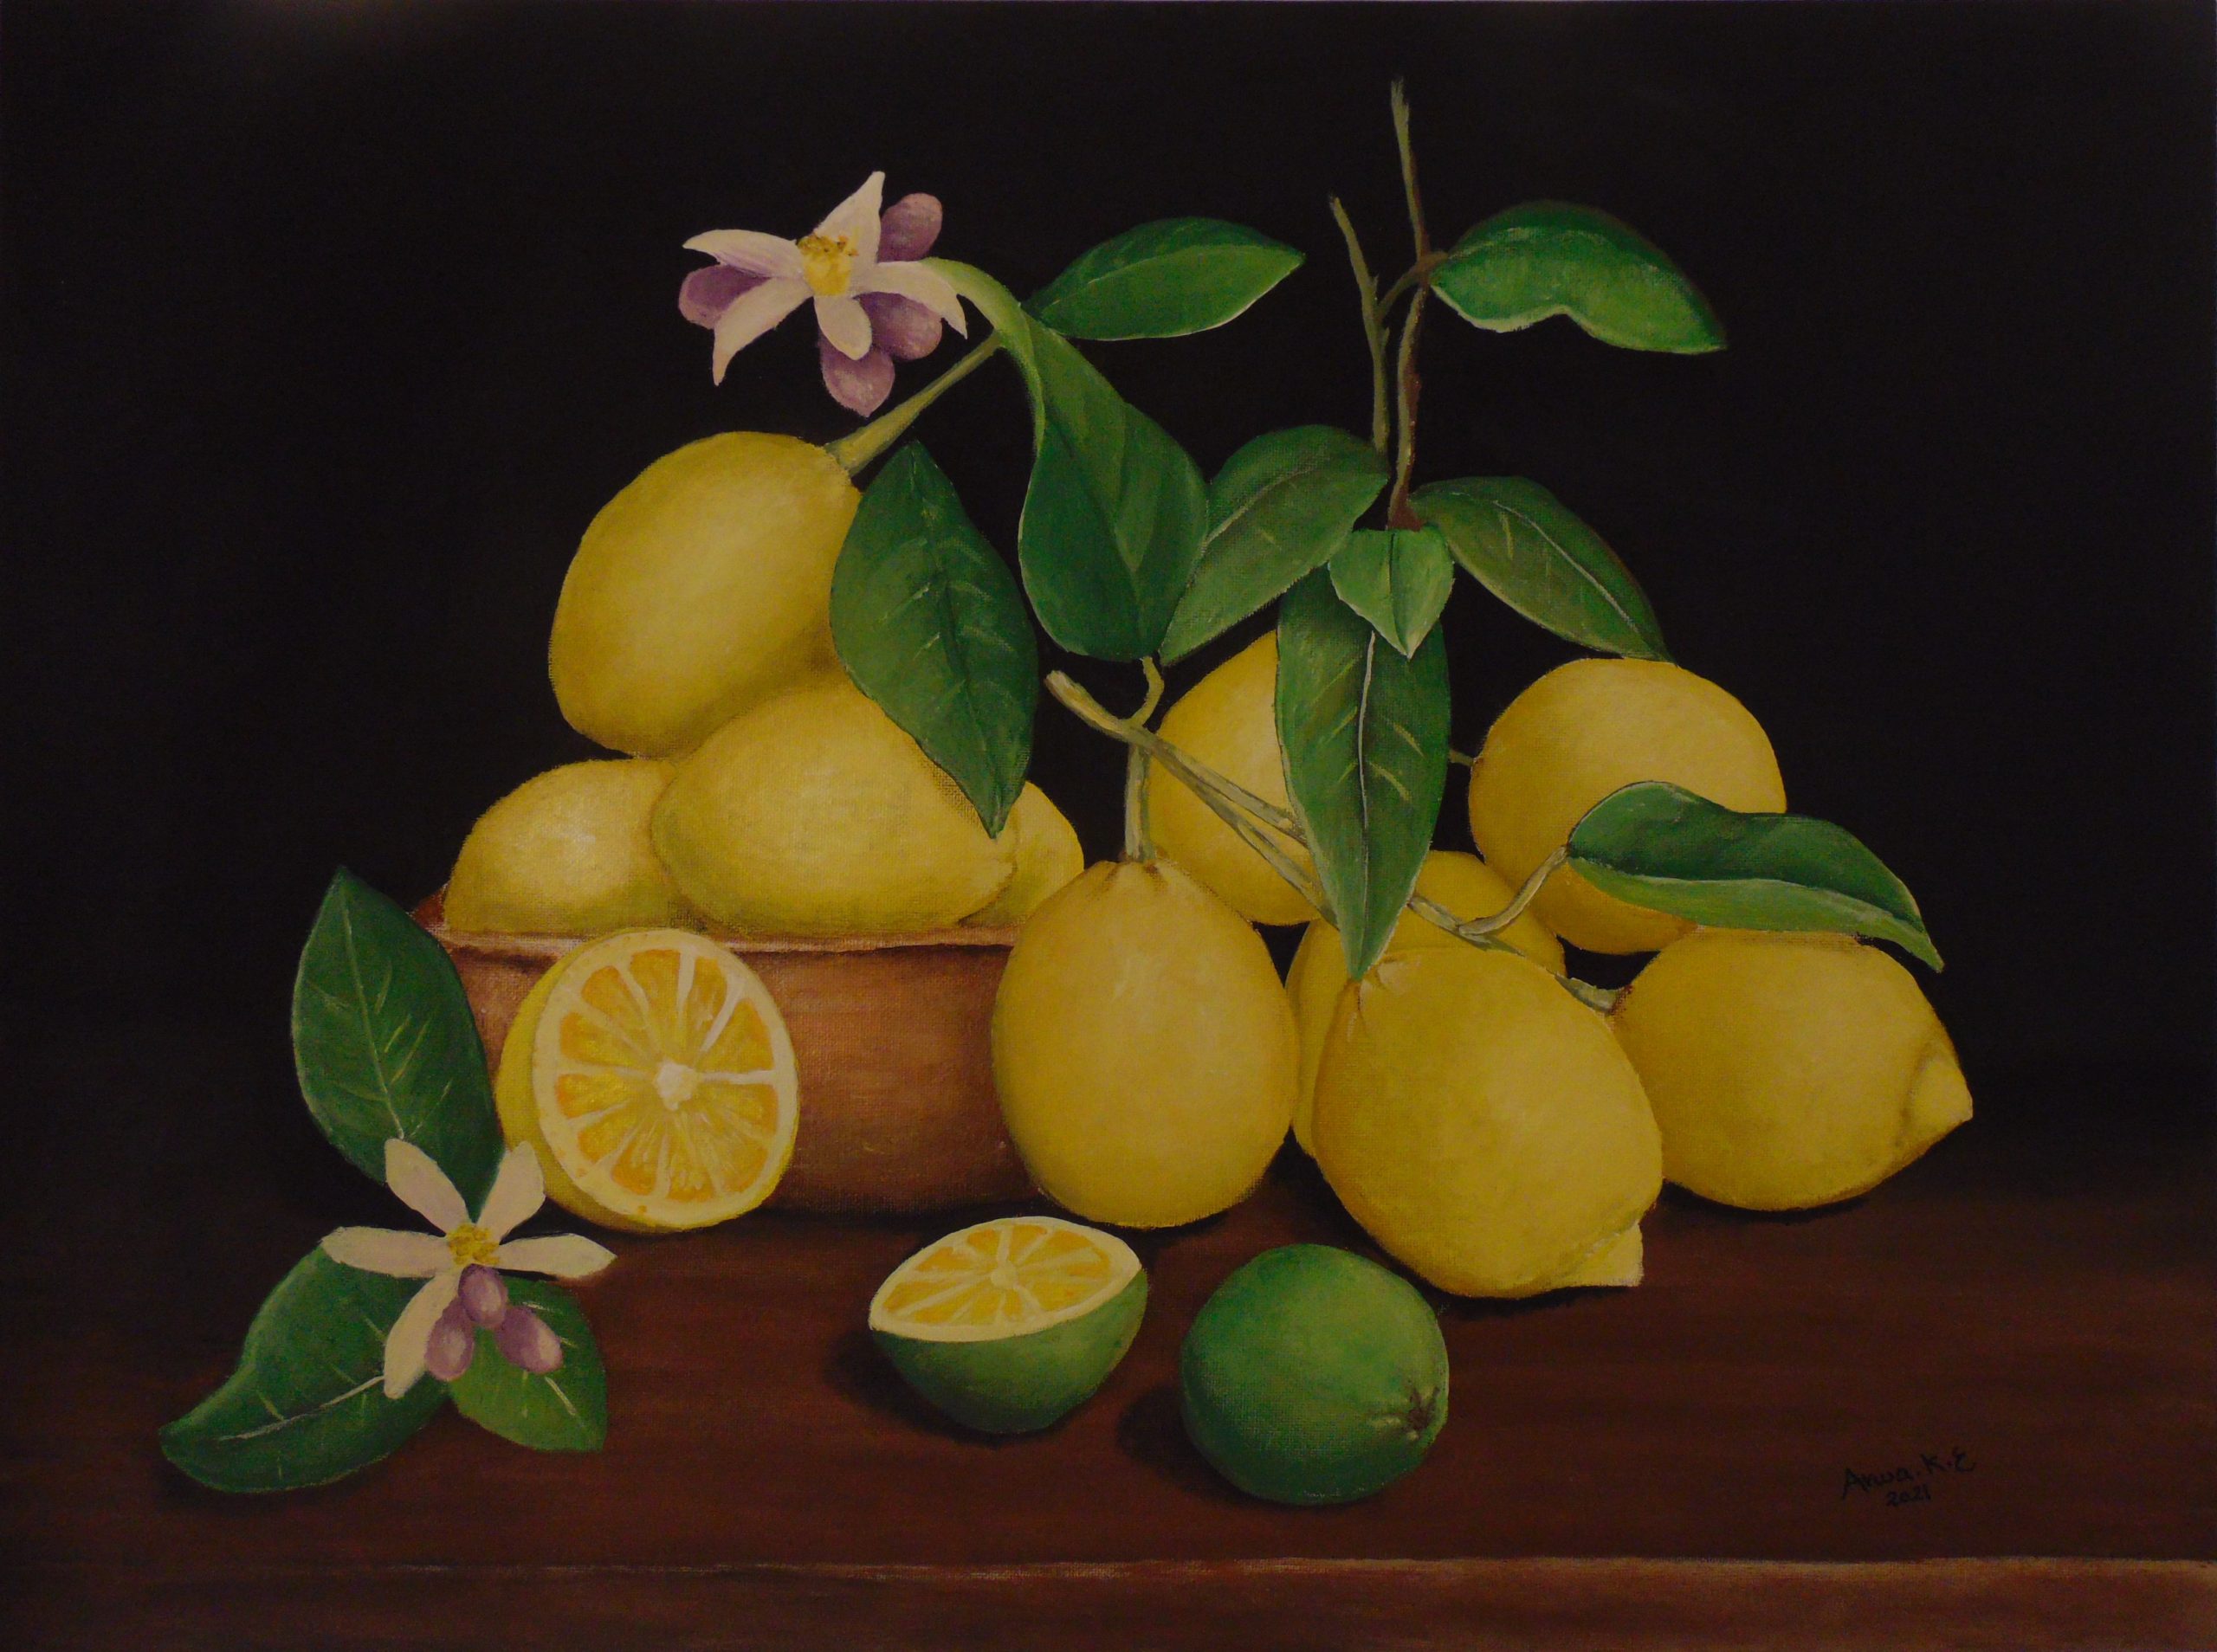 Painting of Lemons and Limes by Arwa Khadr ElBoraei, Art exhibit at Brookside Gardens,